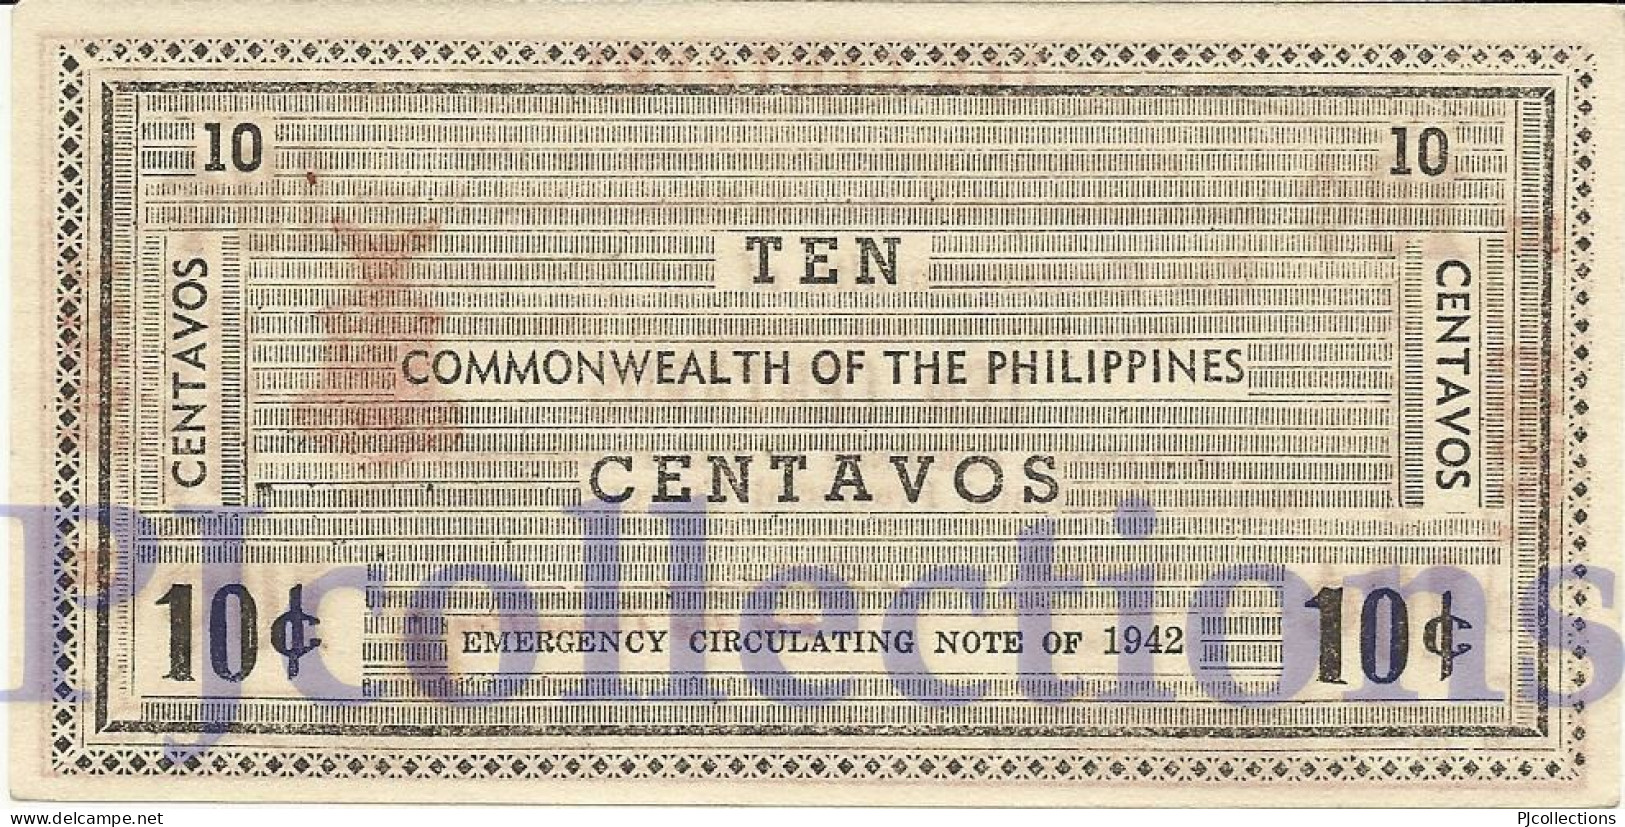 PHILIPPINES 10 CENTAVOS 1942 PICK S643a AUNC EMERGENCY NOTE - Filipinas